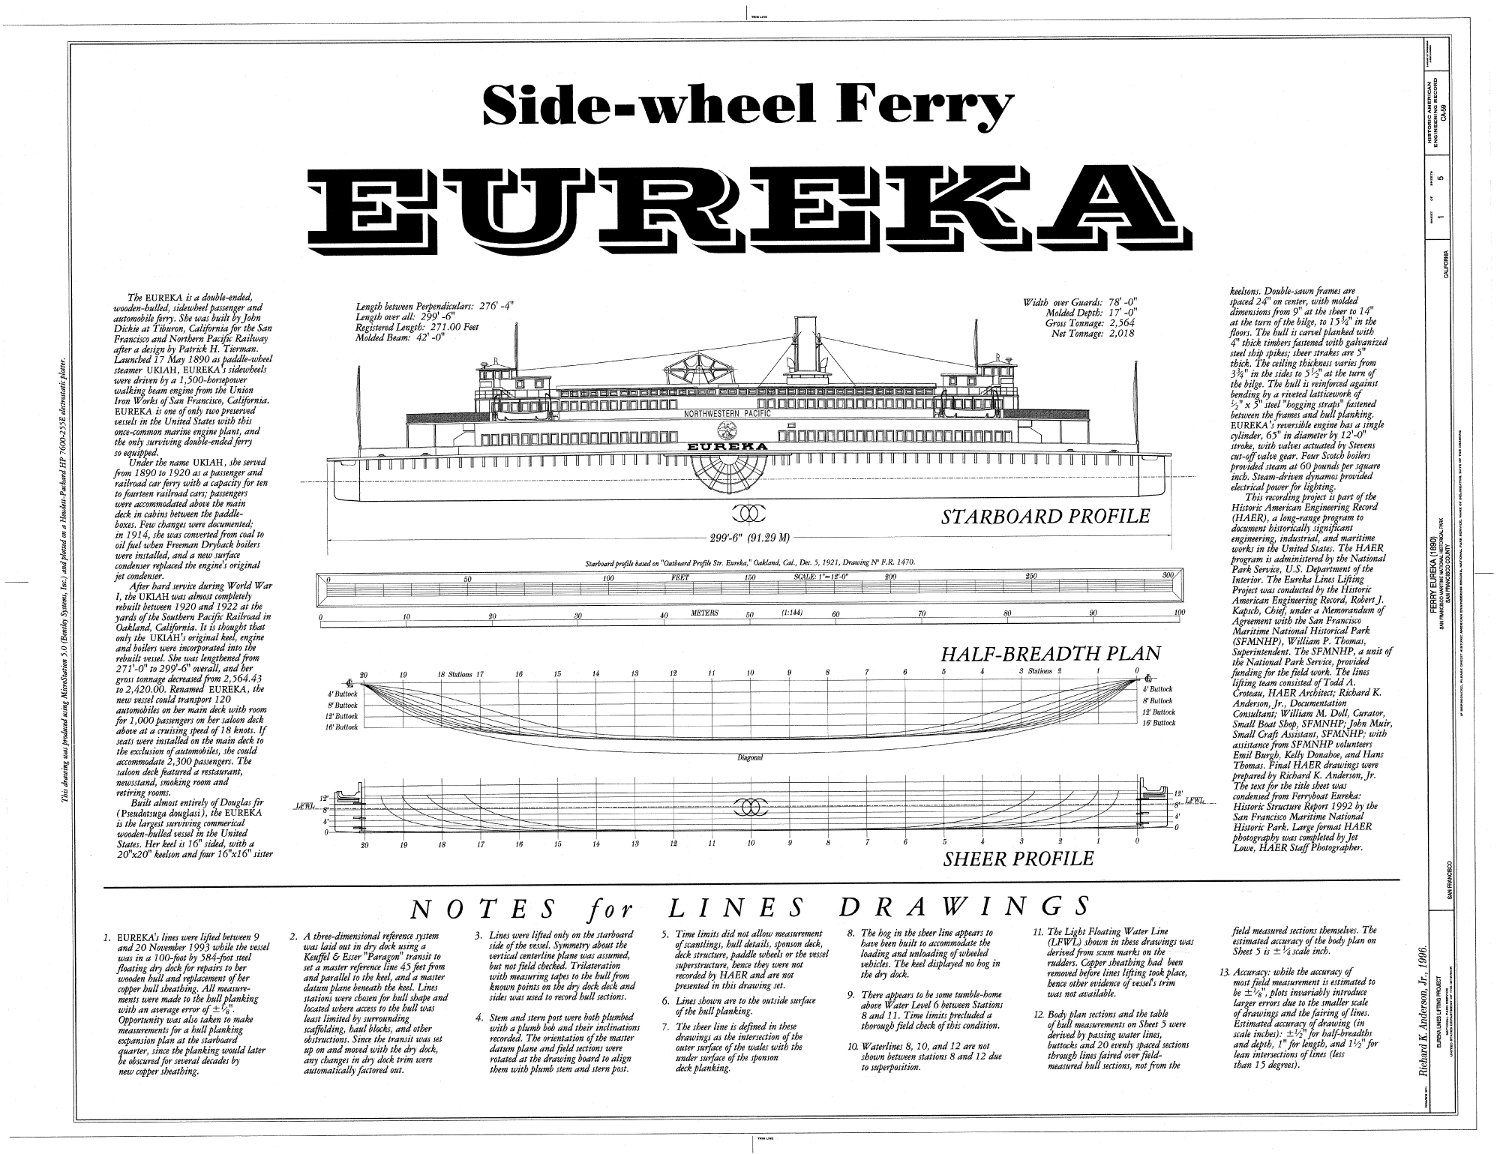 Eureka1.jpg